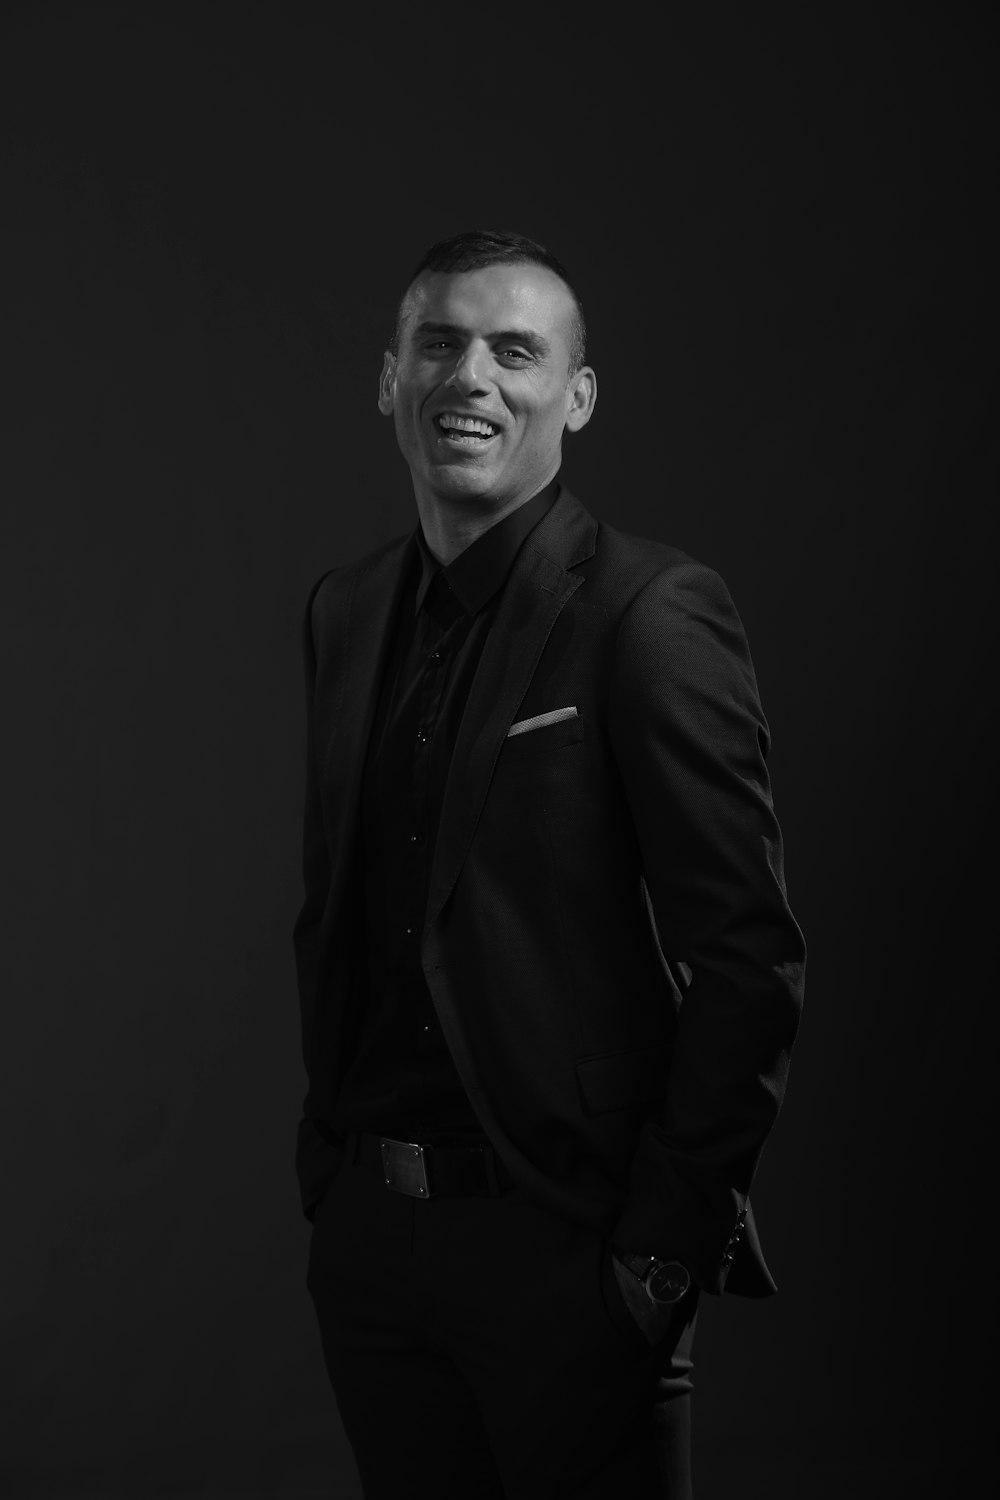 grayscale photography of man wearing black tuxedo